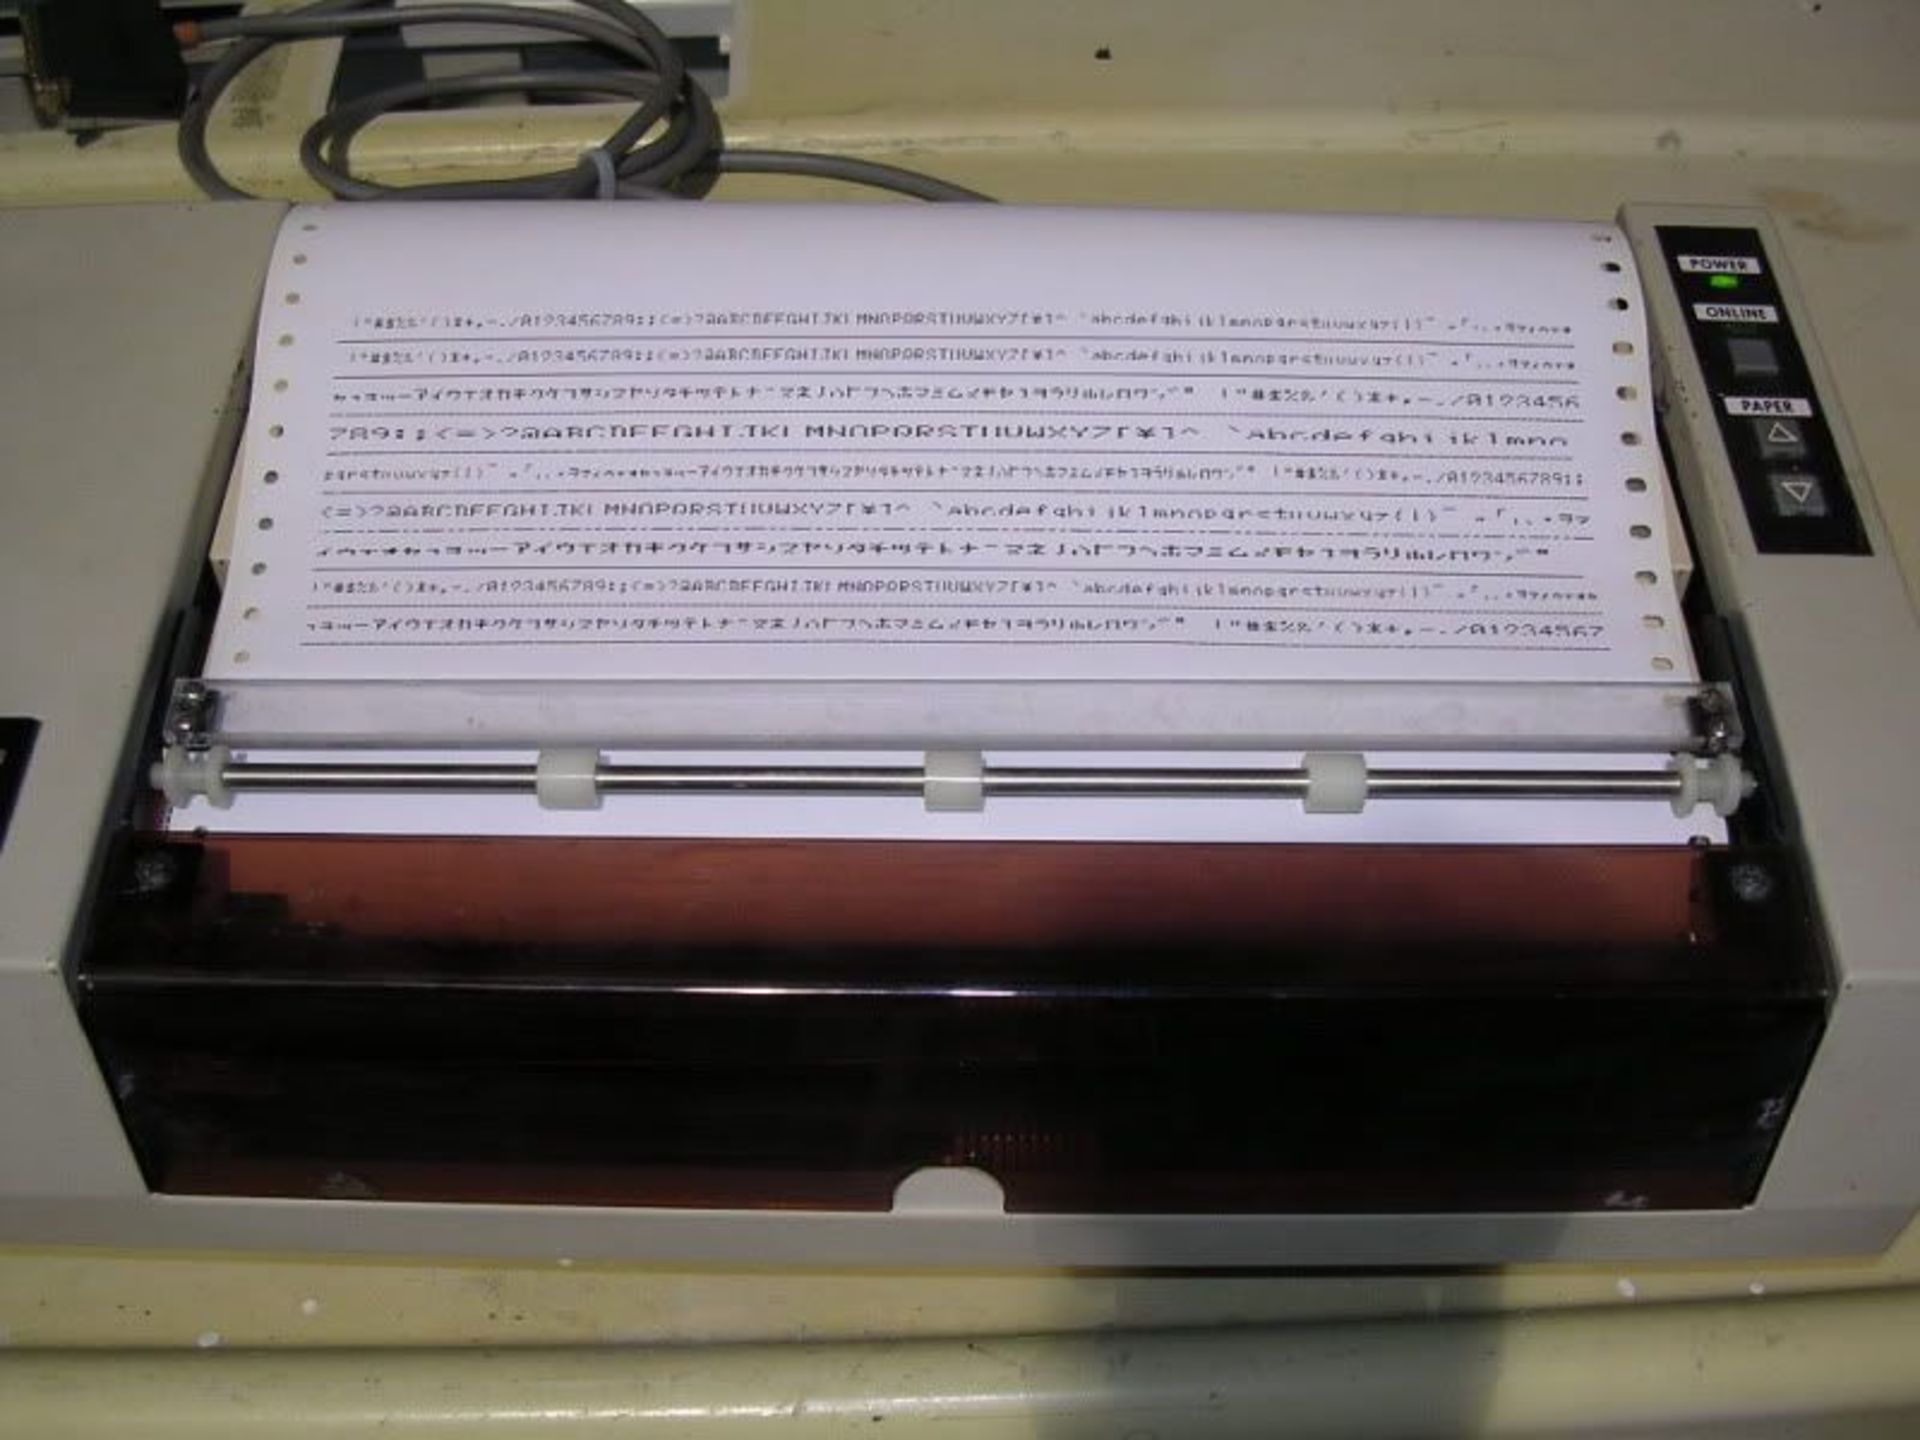 Perkin Elmer GP-100 Printer for Diode Array LC-480, Qty 1, 220762803083 - Image 2 of 6